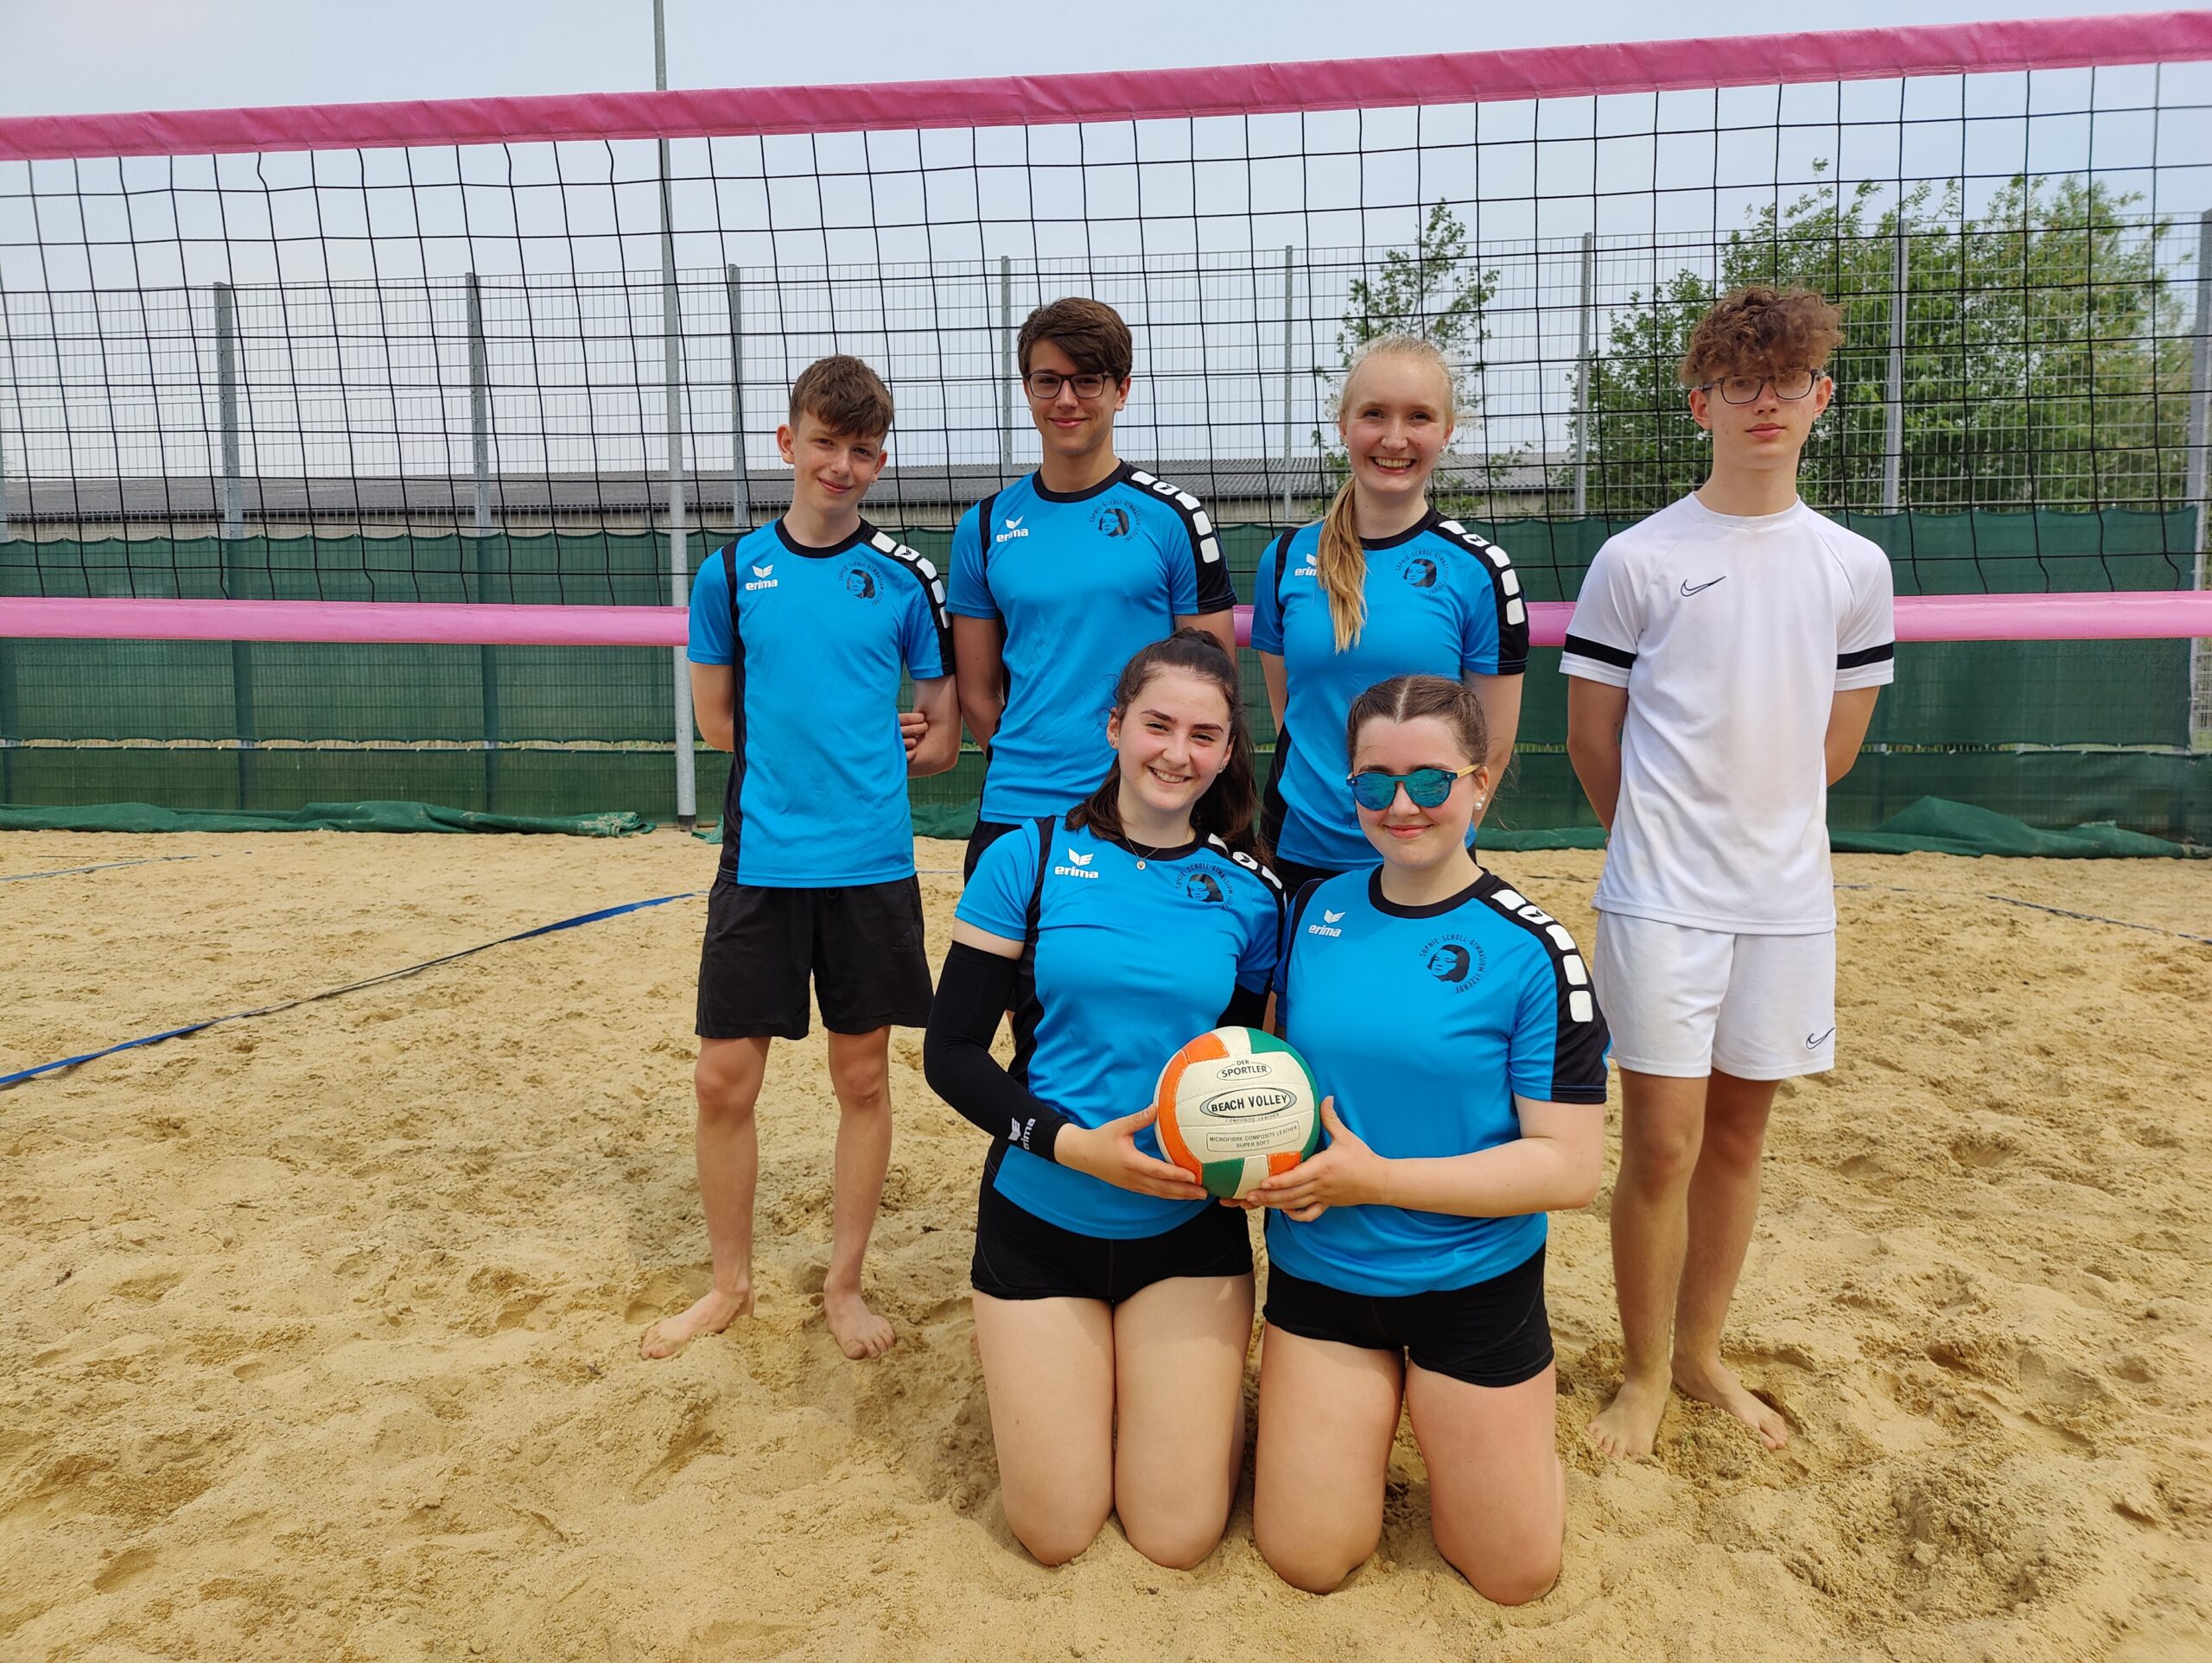 Beachvolleyball – Jugend trainiert für Olympia